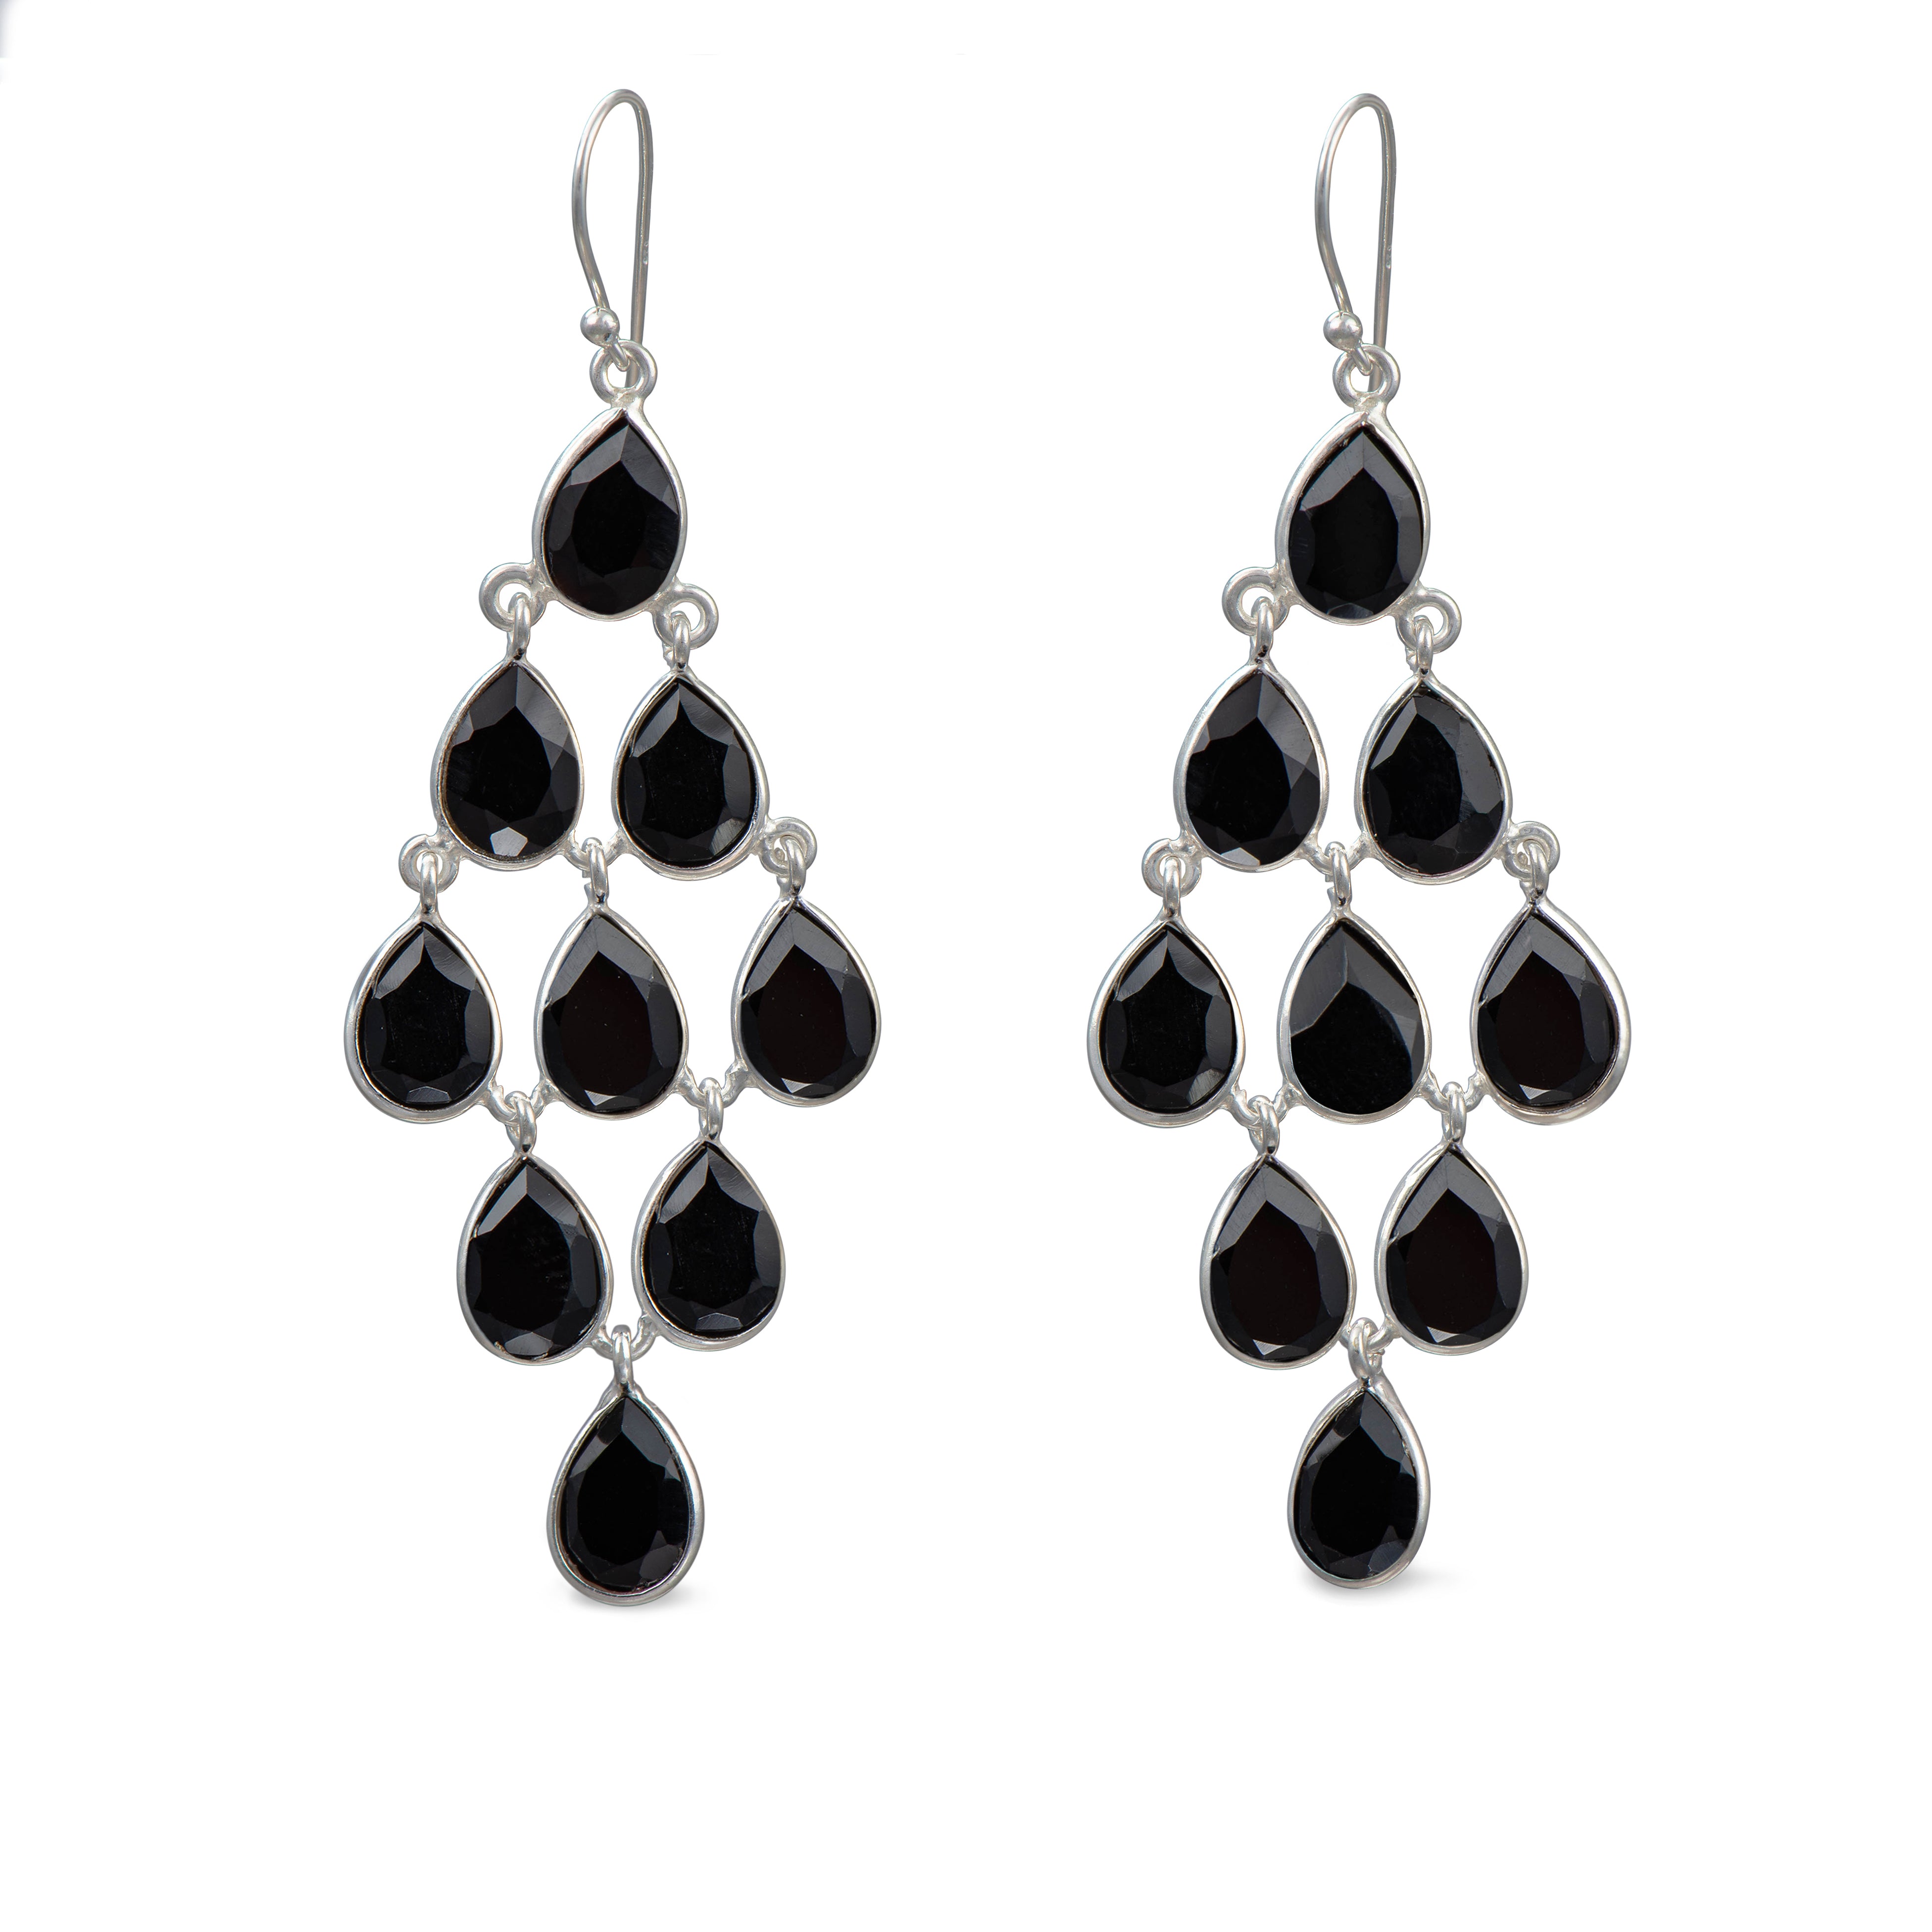 Sterling Silver Chandelier Earrings with Natural Gemstones - Black Onyx